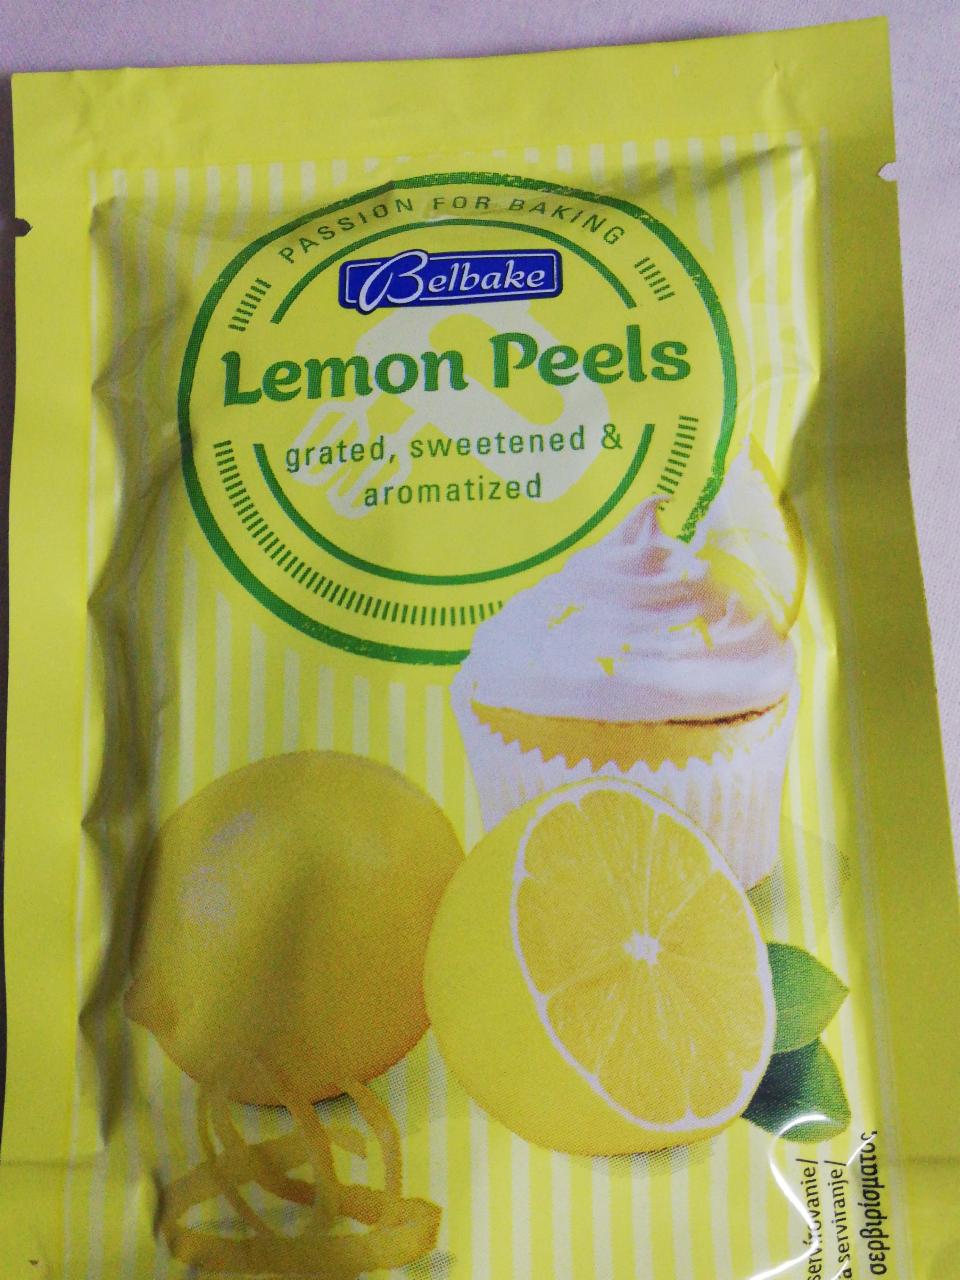 Fotografie - Lemon Peels Belbake Strúhaná citrónová kôra, sladená, aromatizovaná